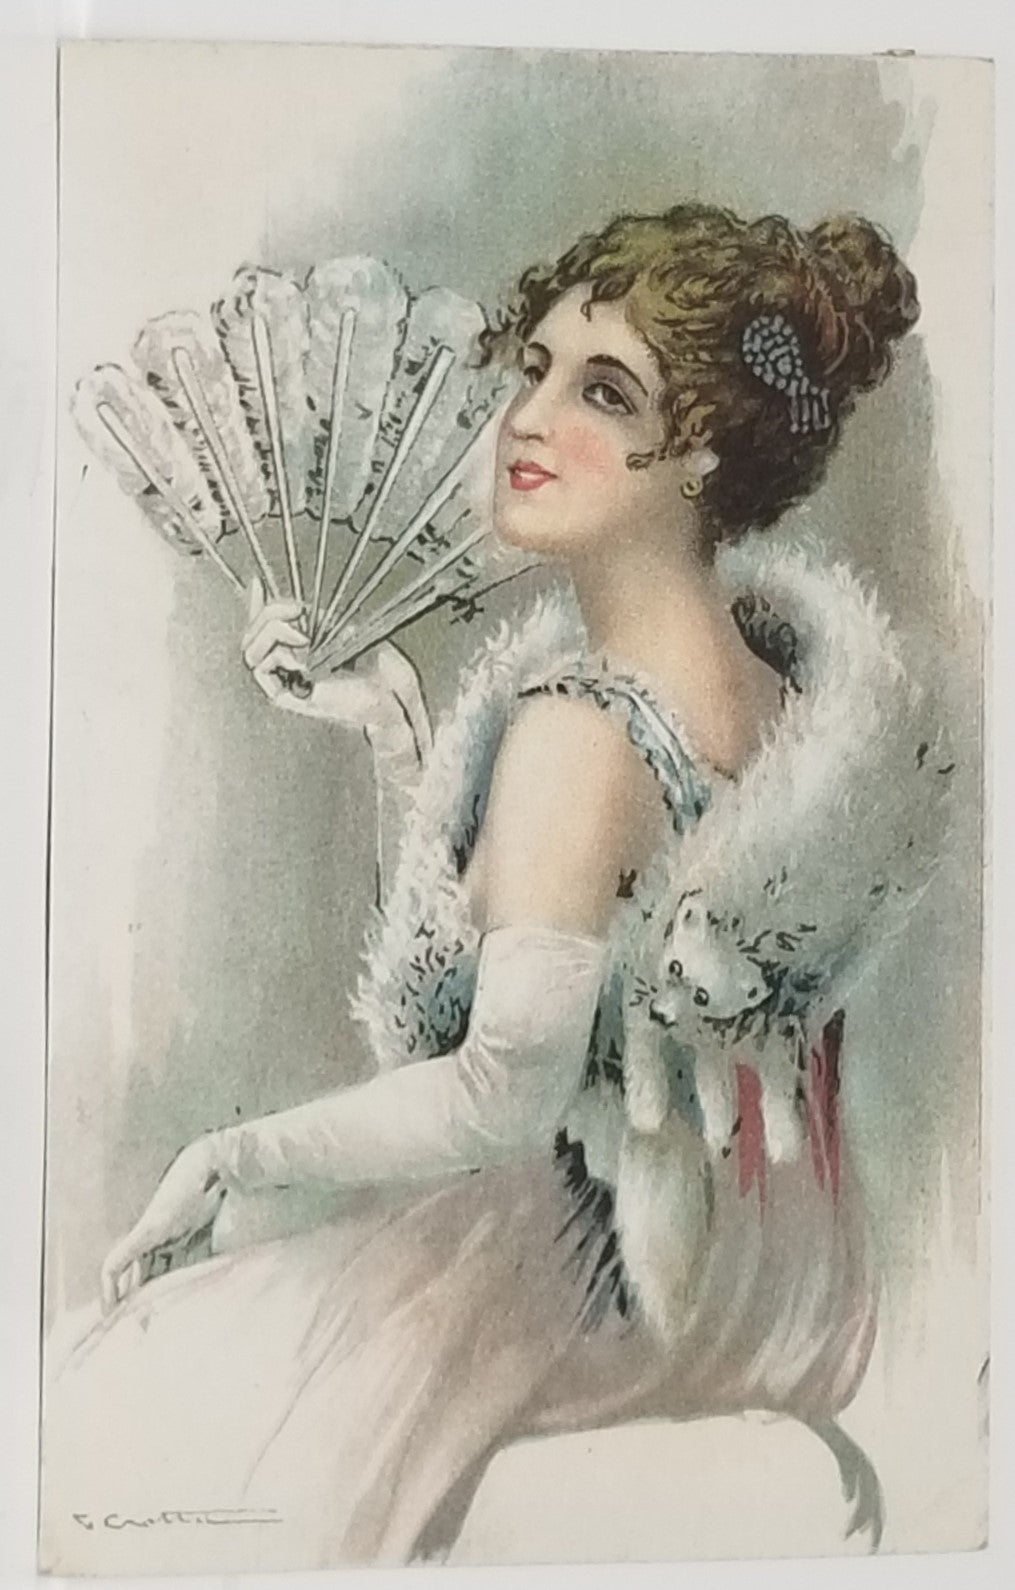 Artist Signed G. Crotta Postcard Italian Glamour Girl Female with Fan Series 3547 1920s Art Post Card